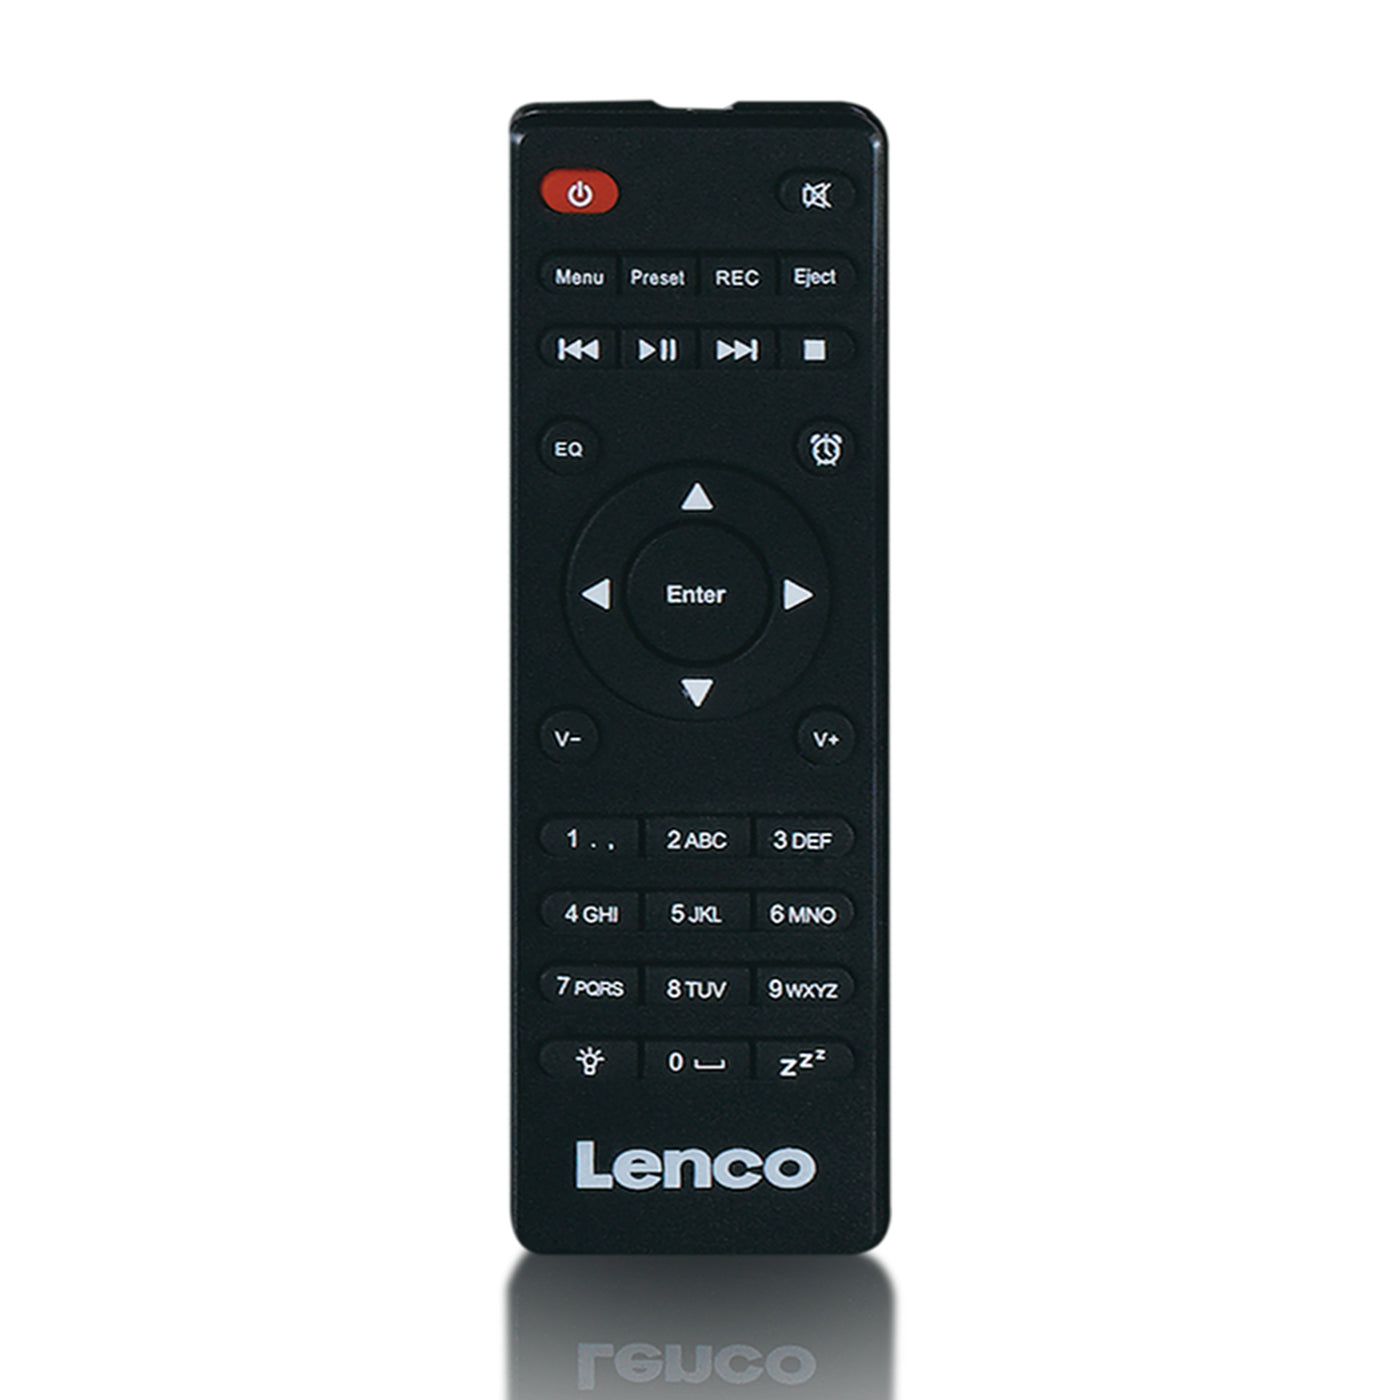 LENCO MC-460BK with – Hifi Lenco internet, - Black set DAB+ - FM radio -Catalog and